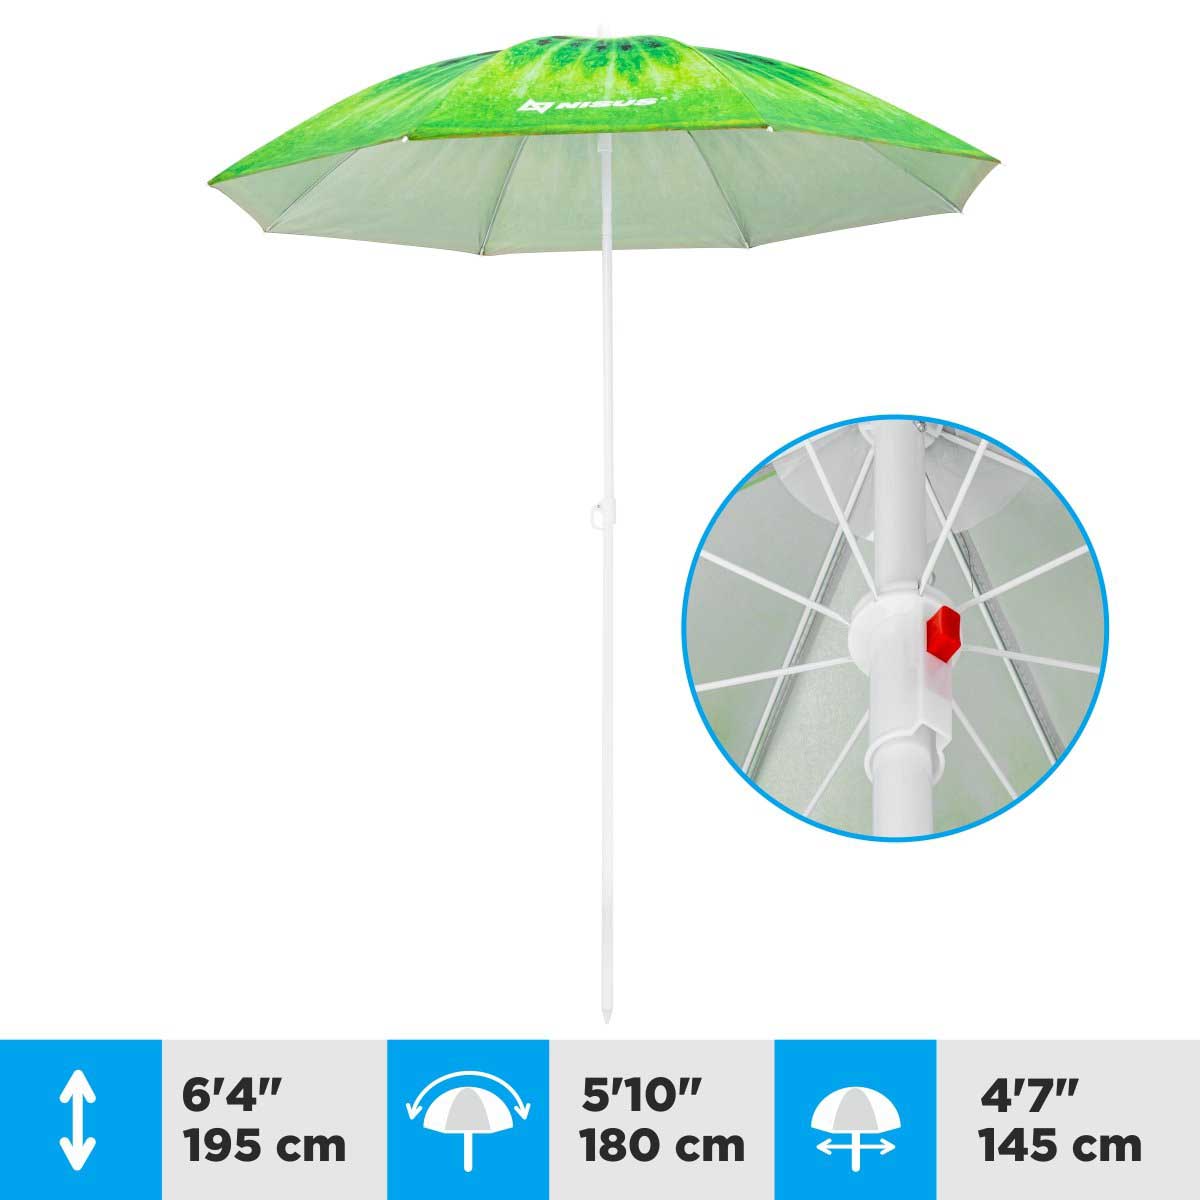 A 4.7 ft Kiwi Folding Tilting Beach Umbrella is 6.4 feet high